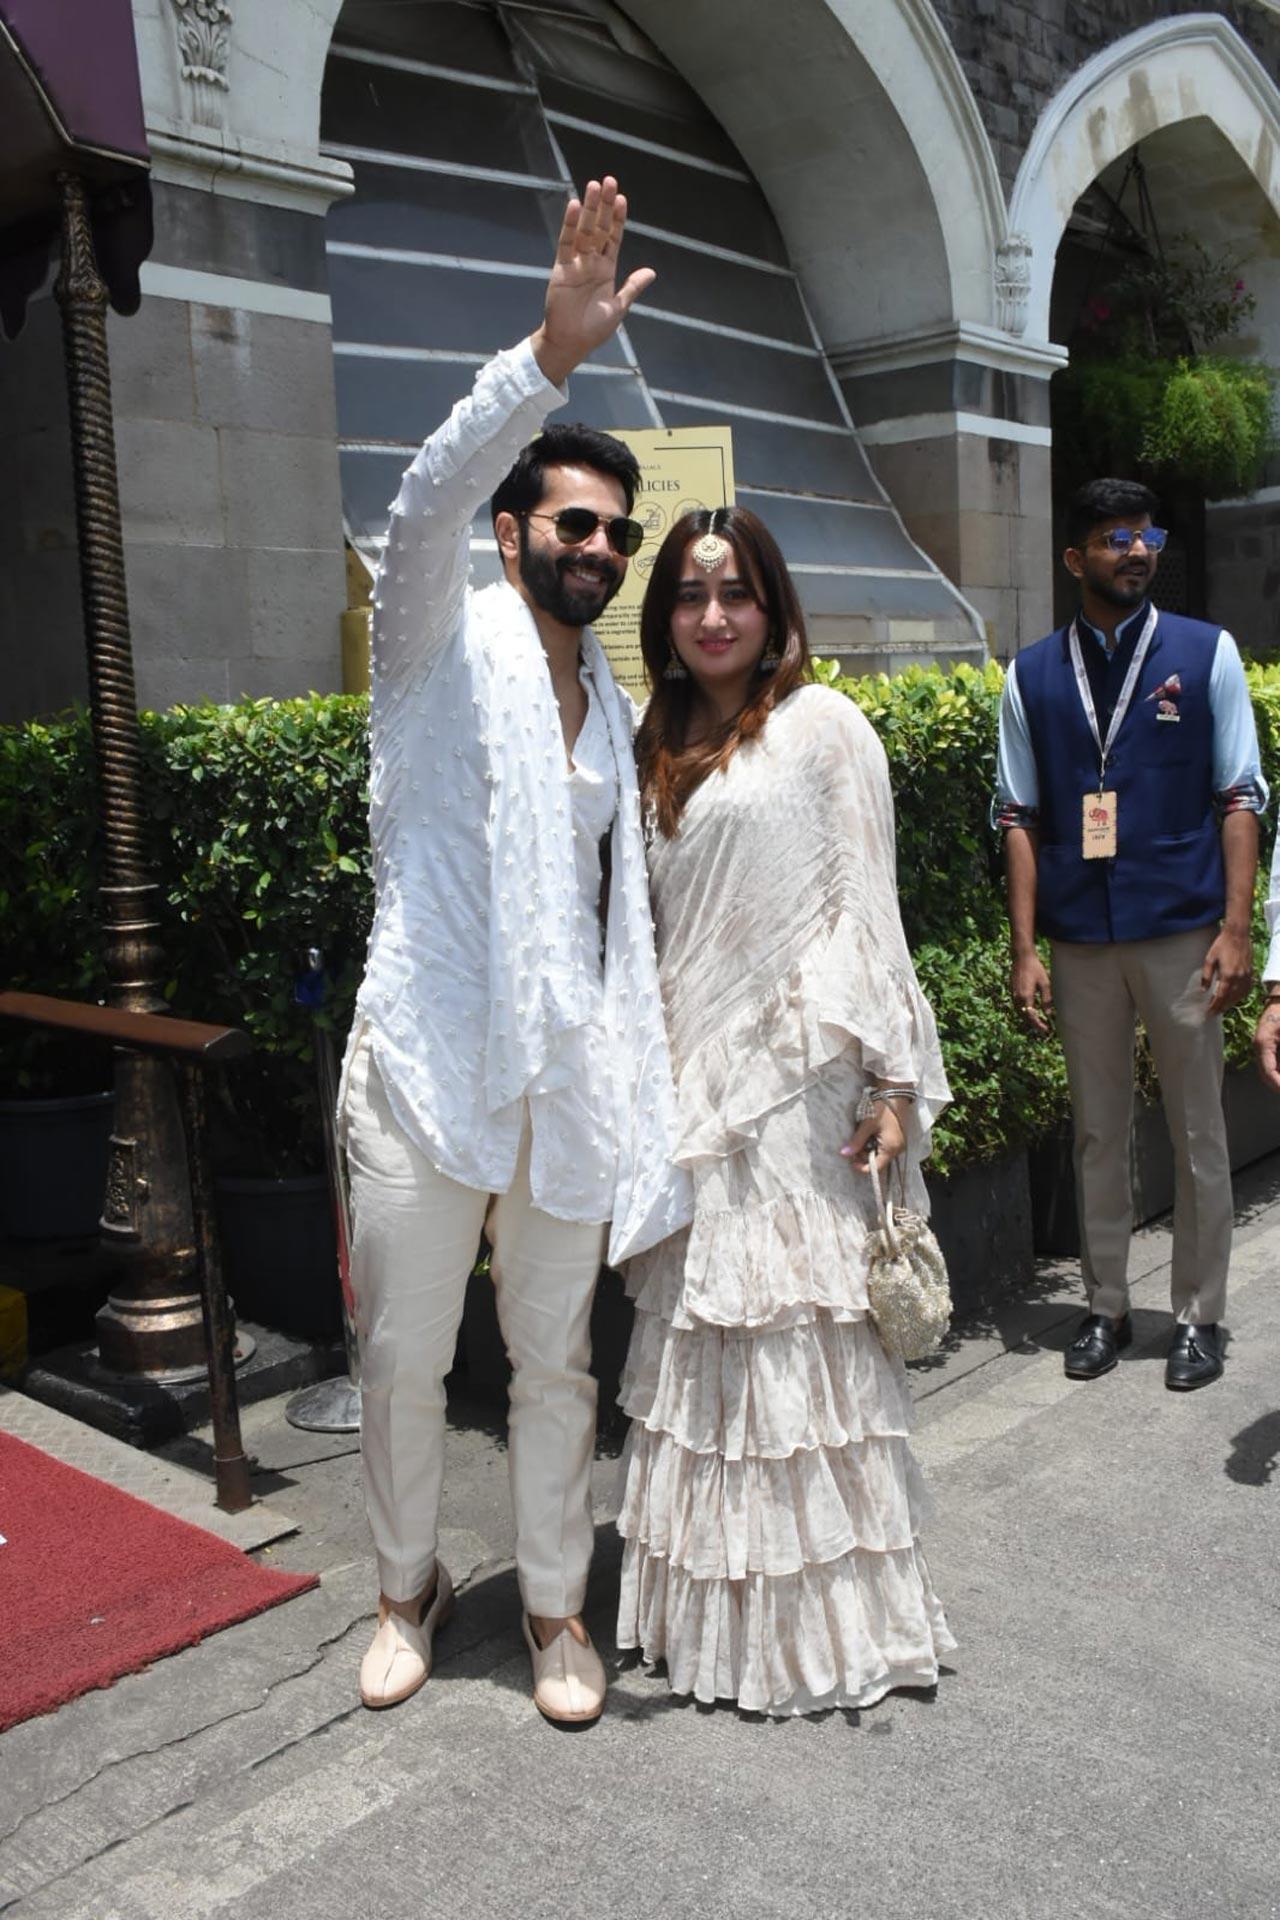 Varun Dhawan waved at the paparazzi as he walked at the venue with his wife Natasha Dalal